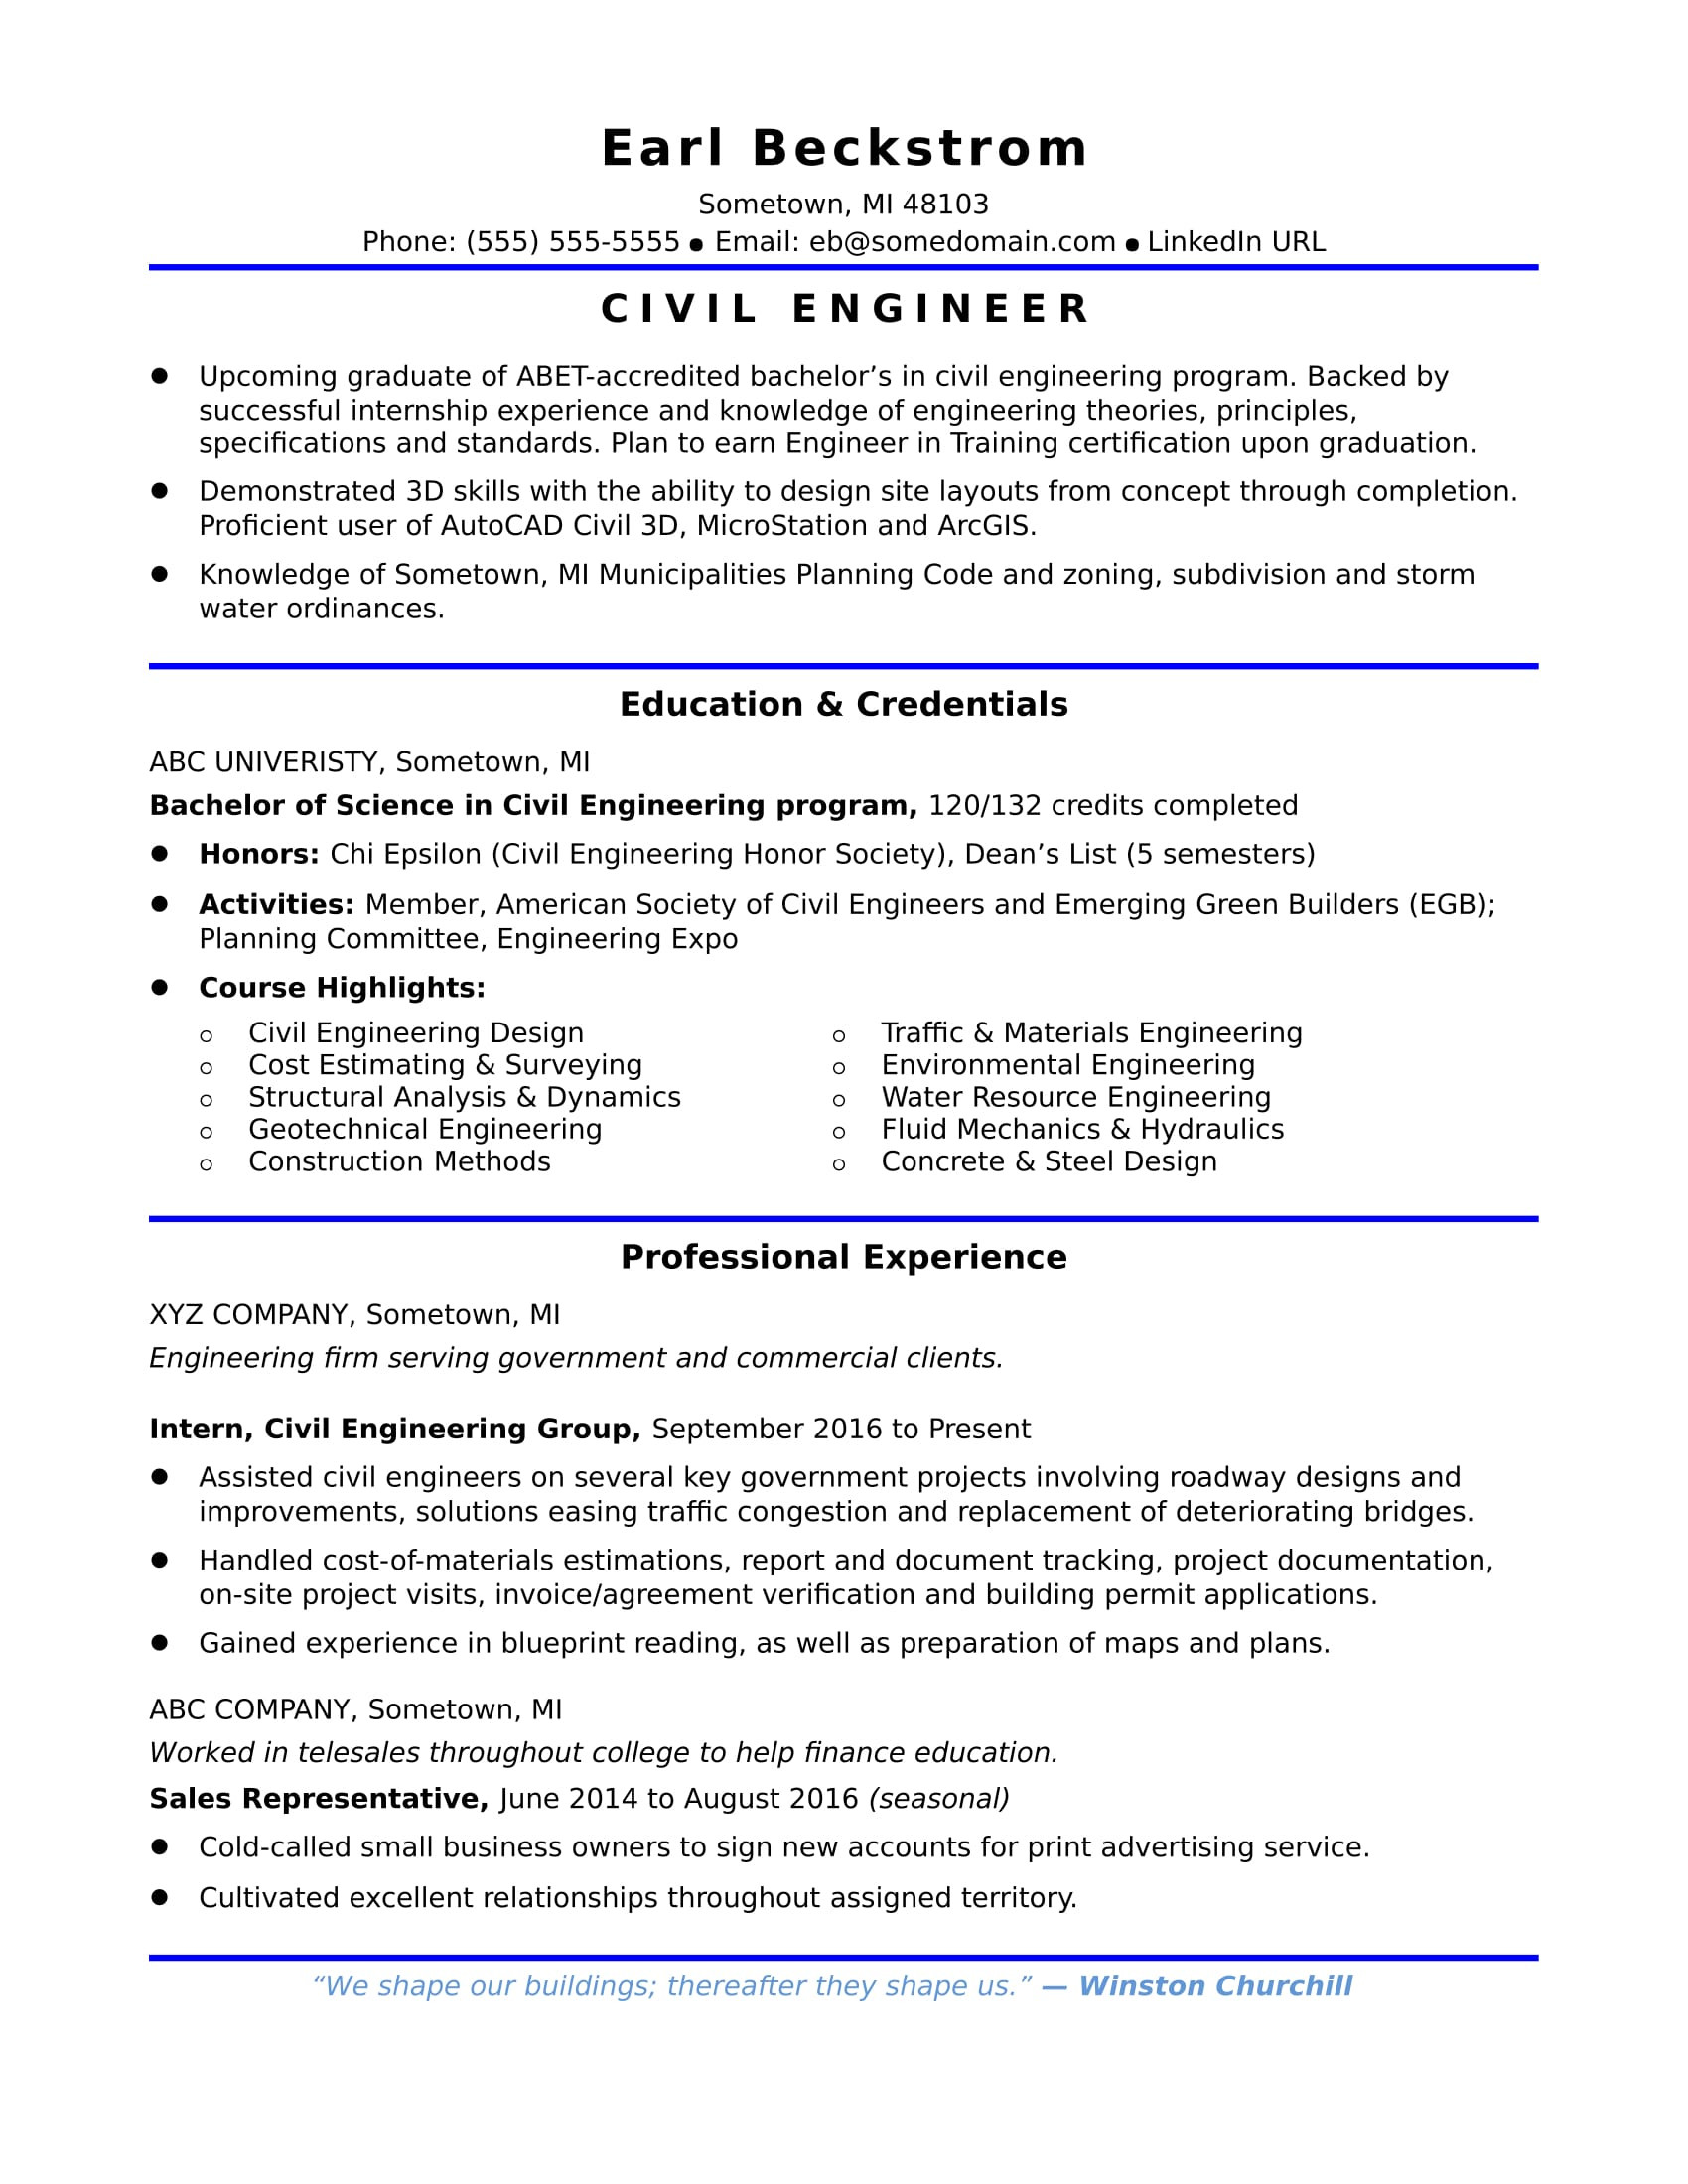 Civil Engineering Sample Resume for Freshers Sample Resume for An Entry-level Civil Engineer Monster.com